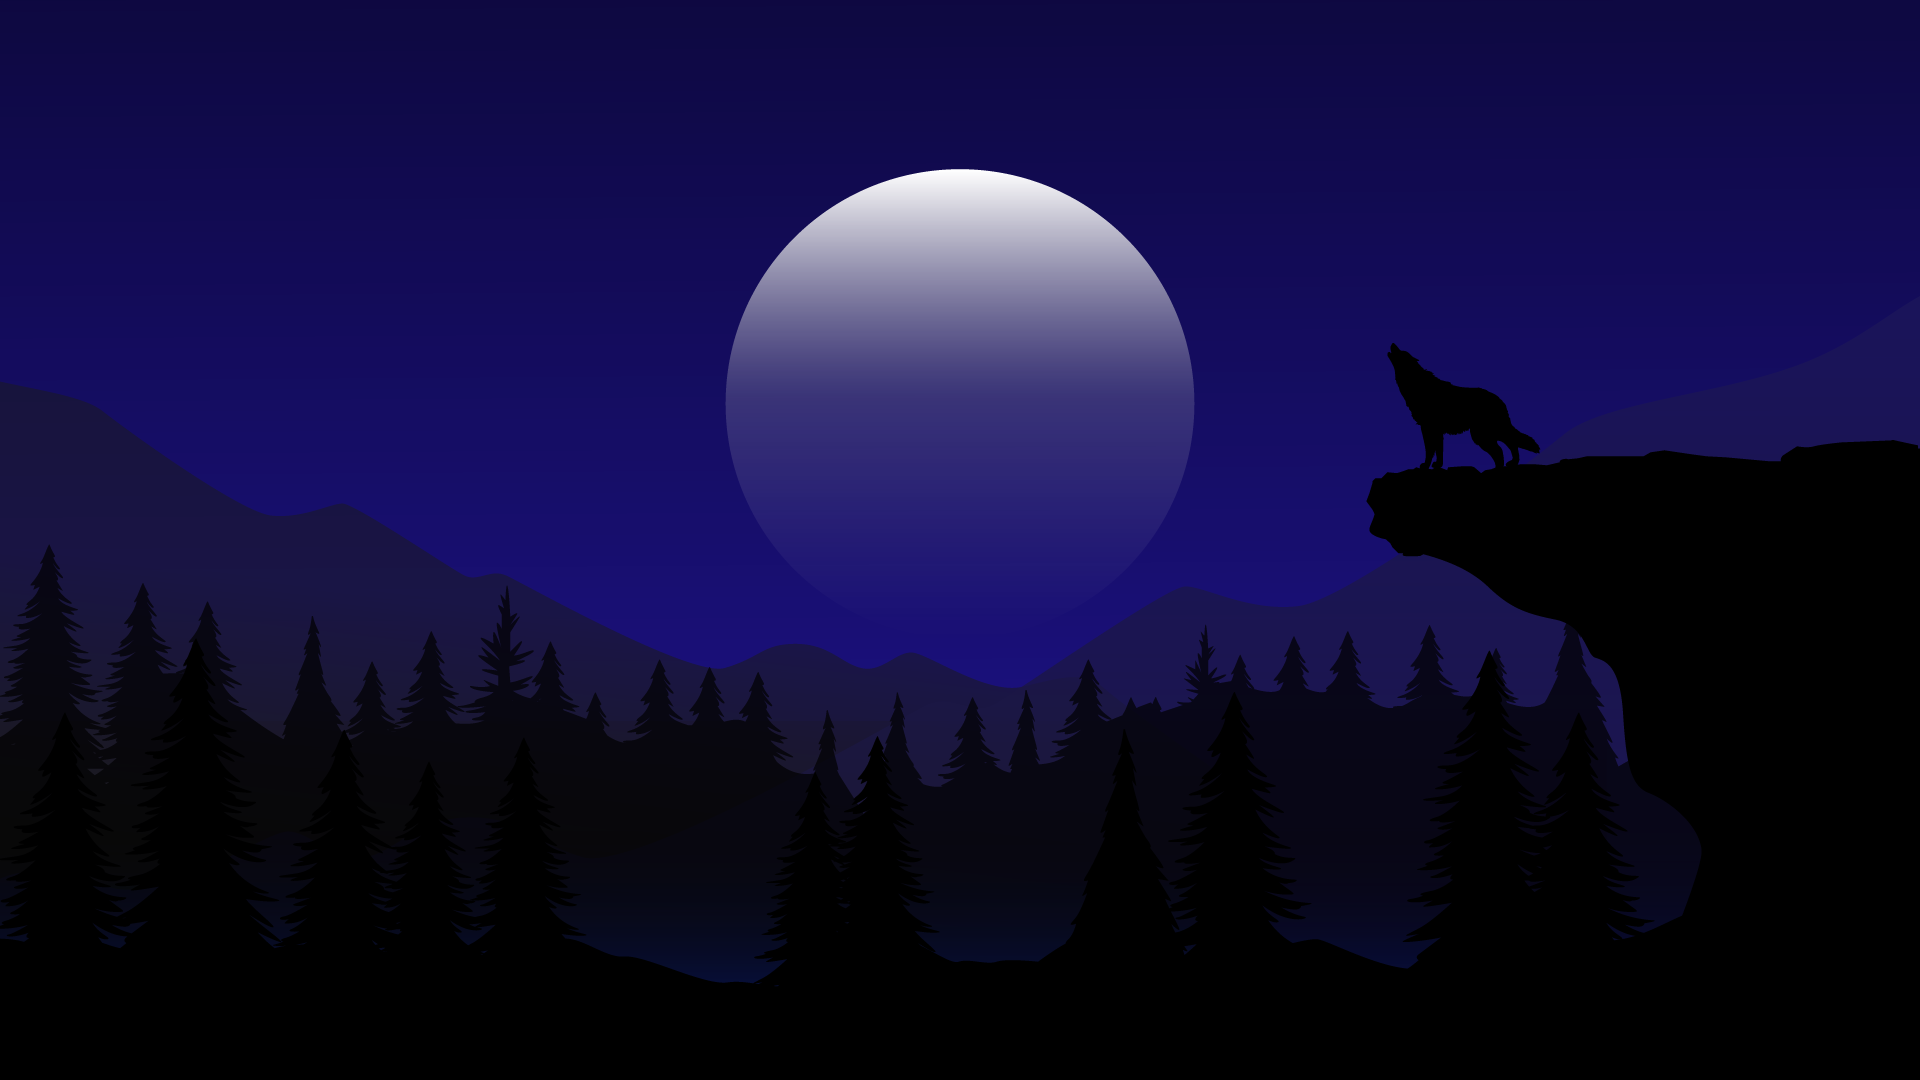 Moon night and wolf howling wallpaper for laptop mac macbook or desktop windows 4k